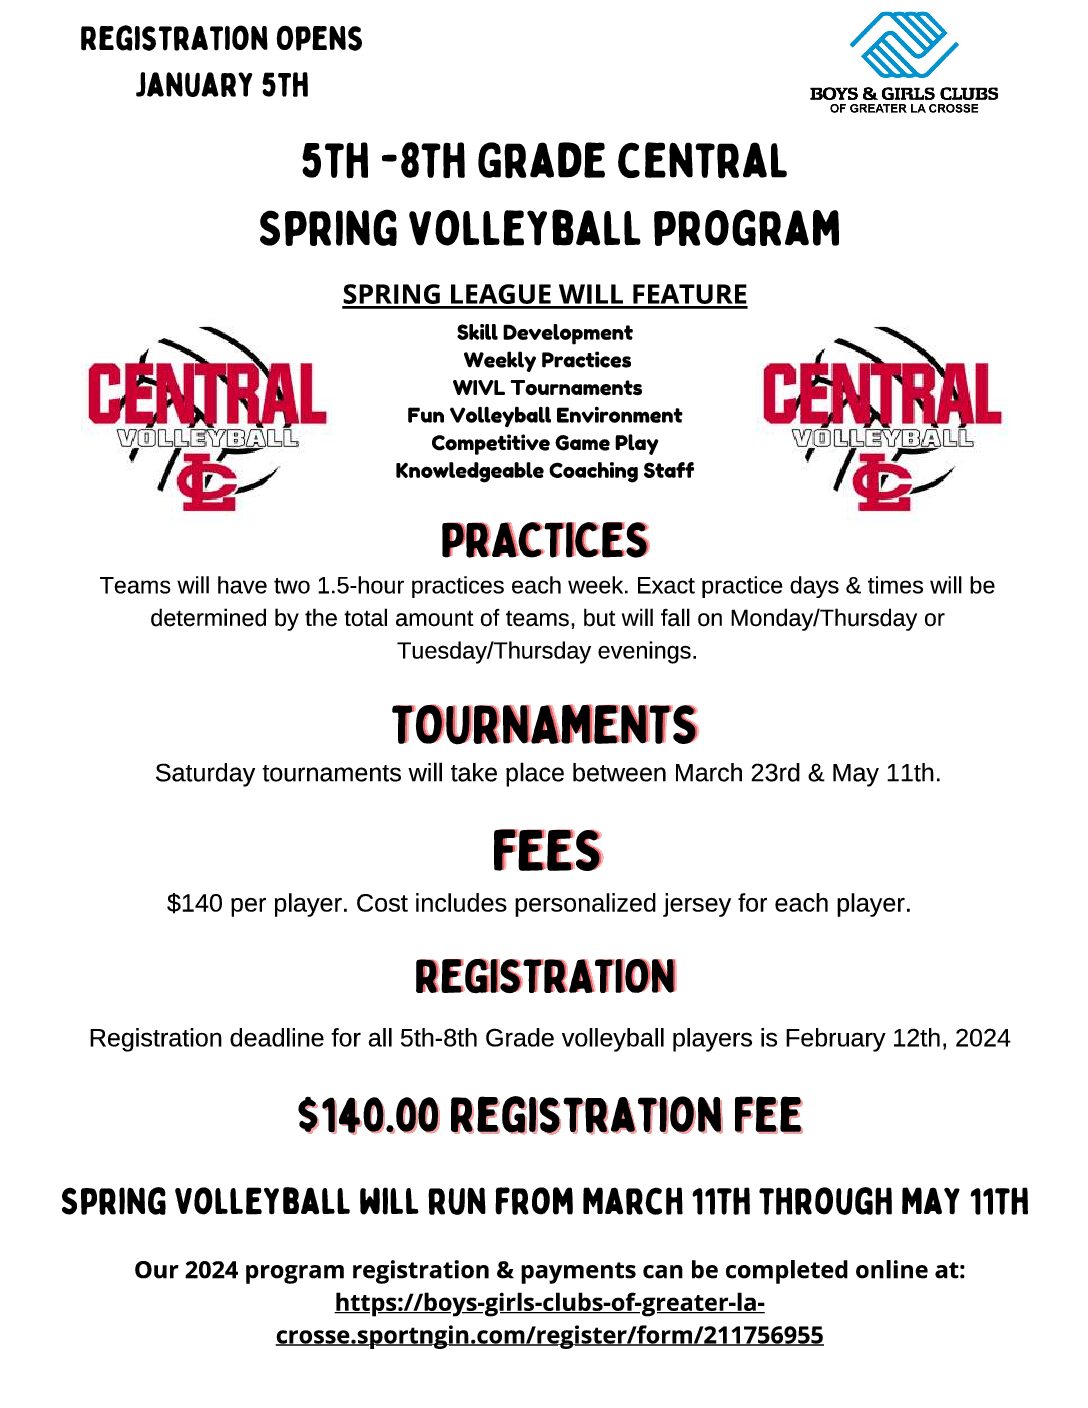 Central Spring Volleyball Program